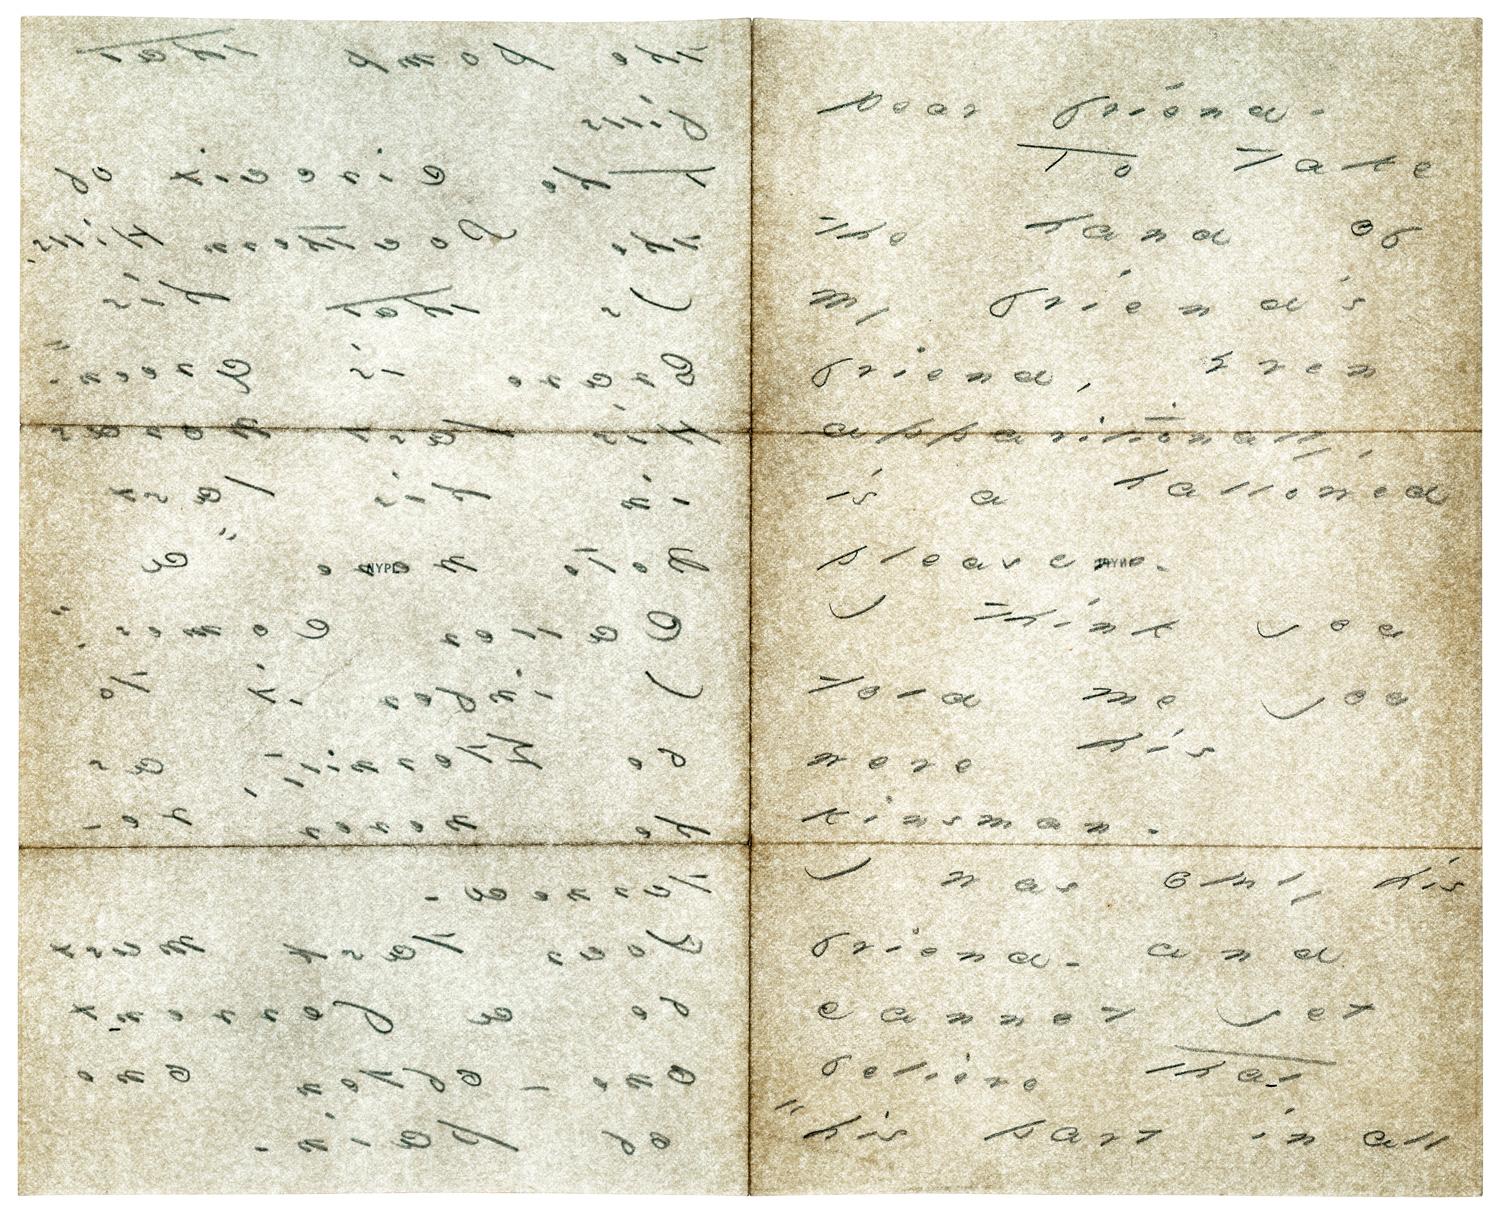 Chad Kleitsch Figurative Photograph - "Emily Dickinson": Still Life Scanograph Photograph of Hand Written Letter